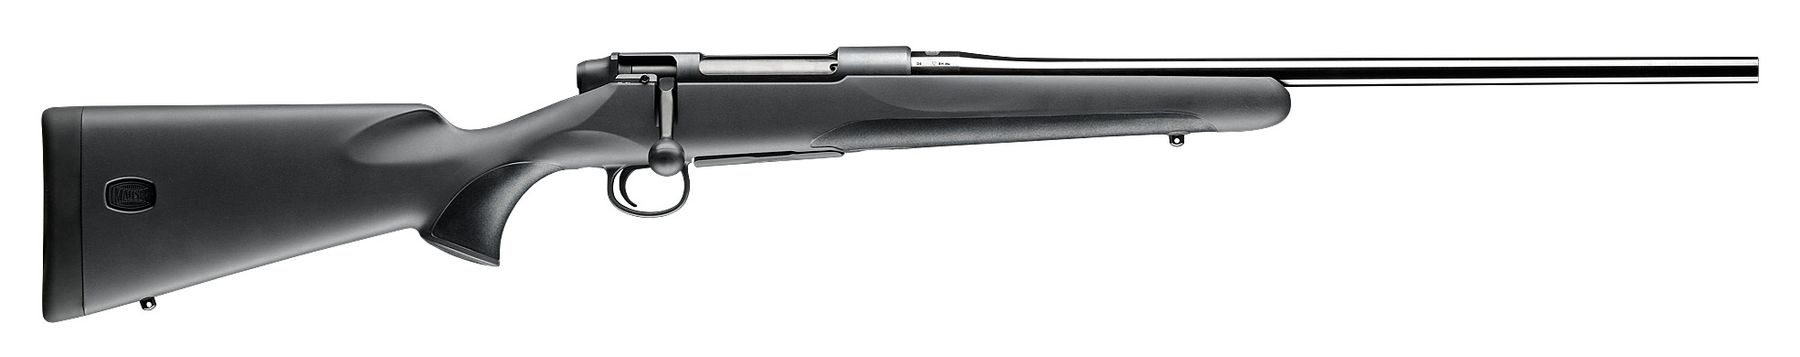 Mauser m18 6,5 creedmoor